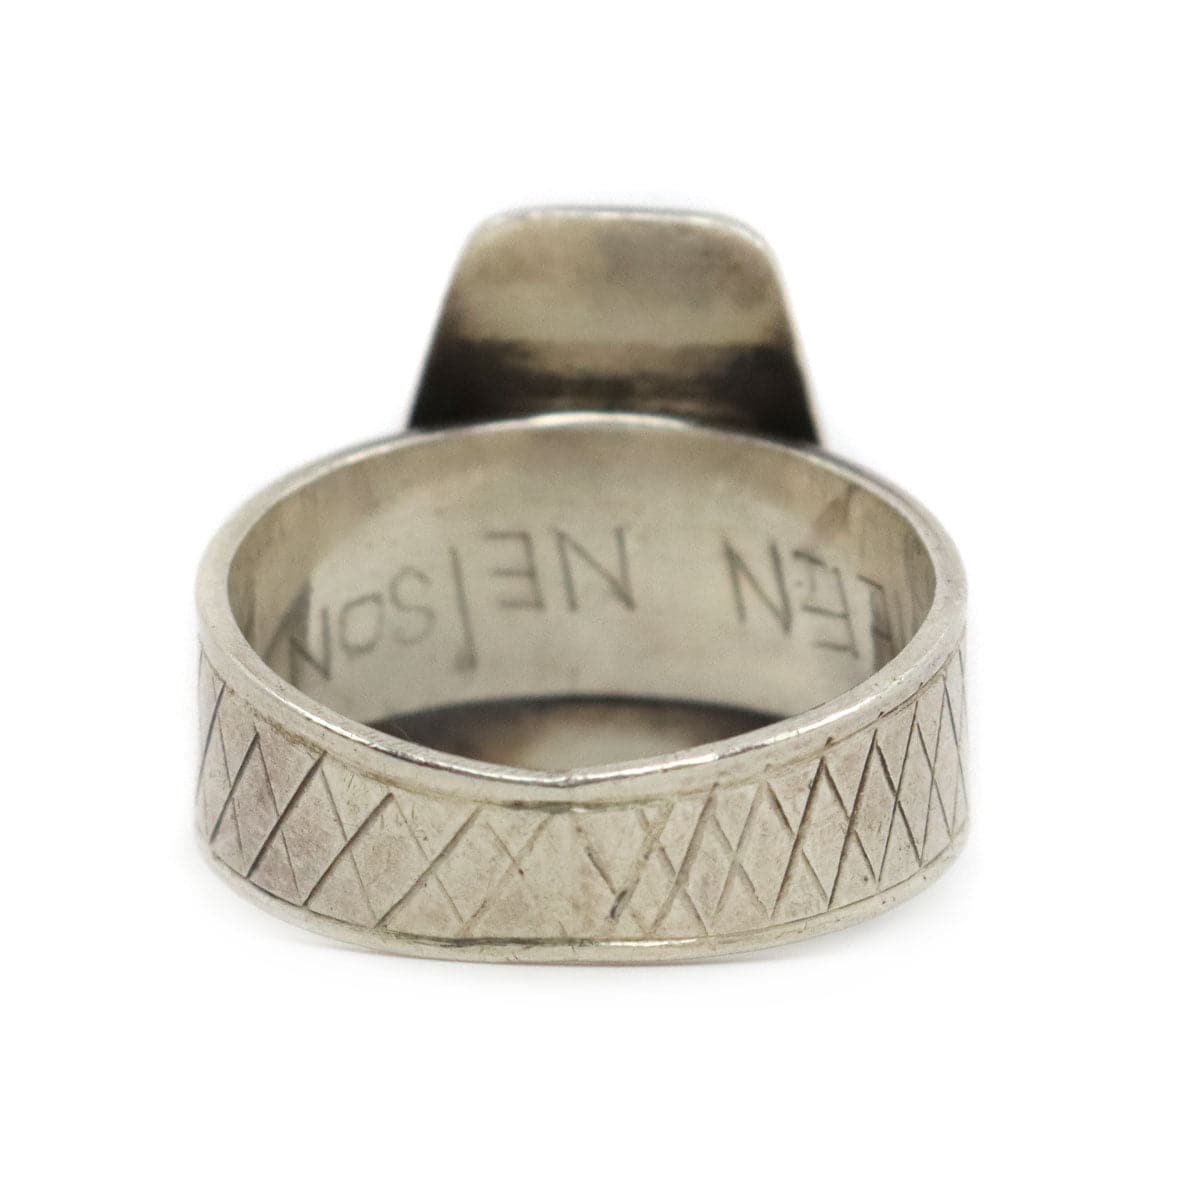 Eileen Nelson - Tlingit Silver Pictorial Ring c. 1970-80s, size 9.5 (J14624) 2